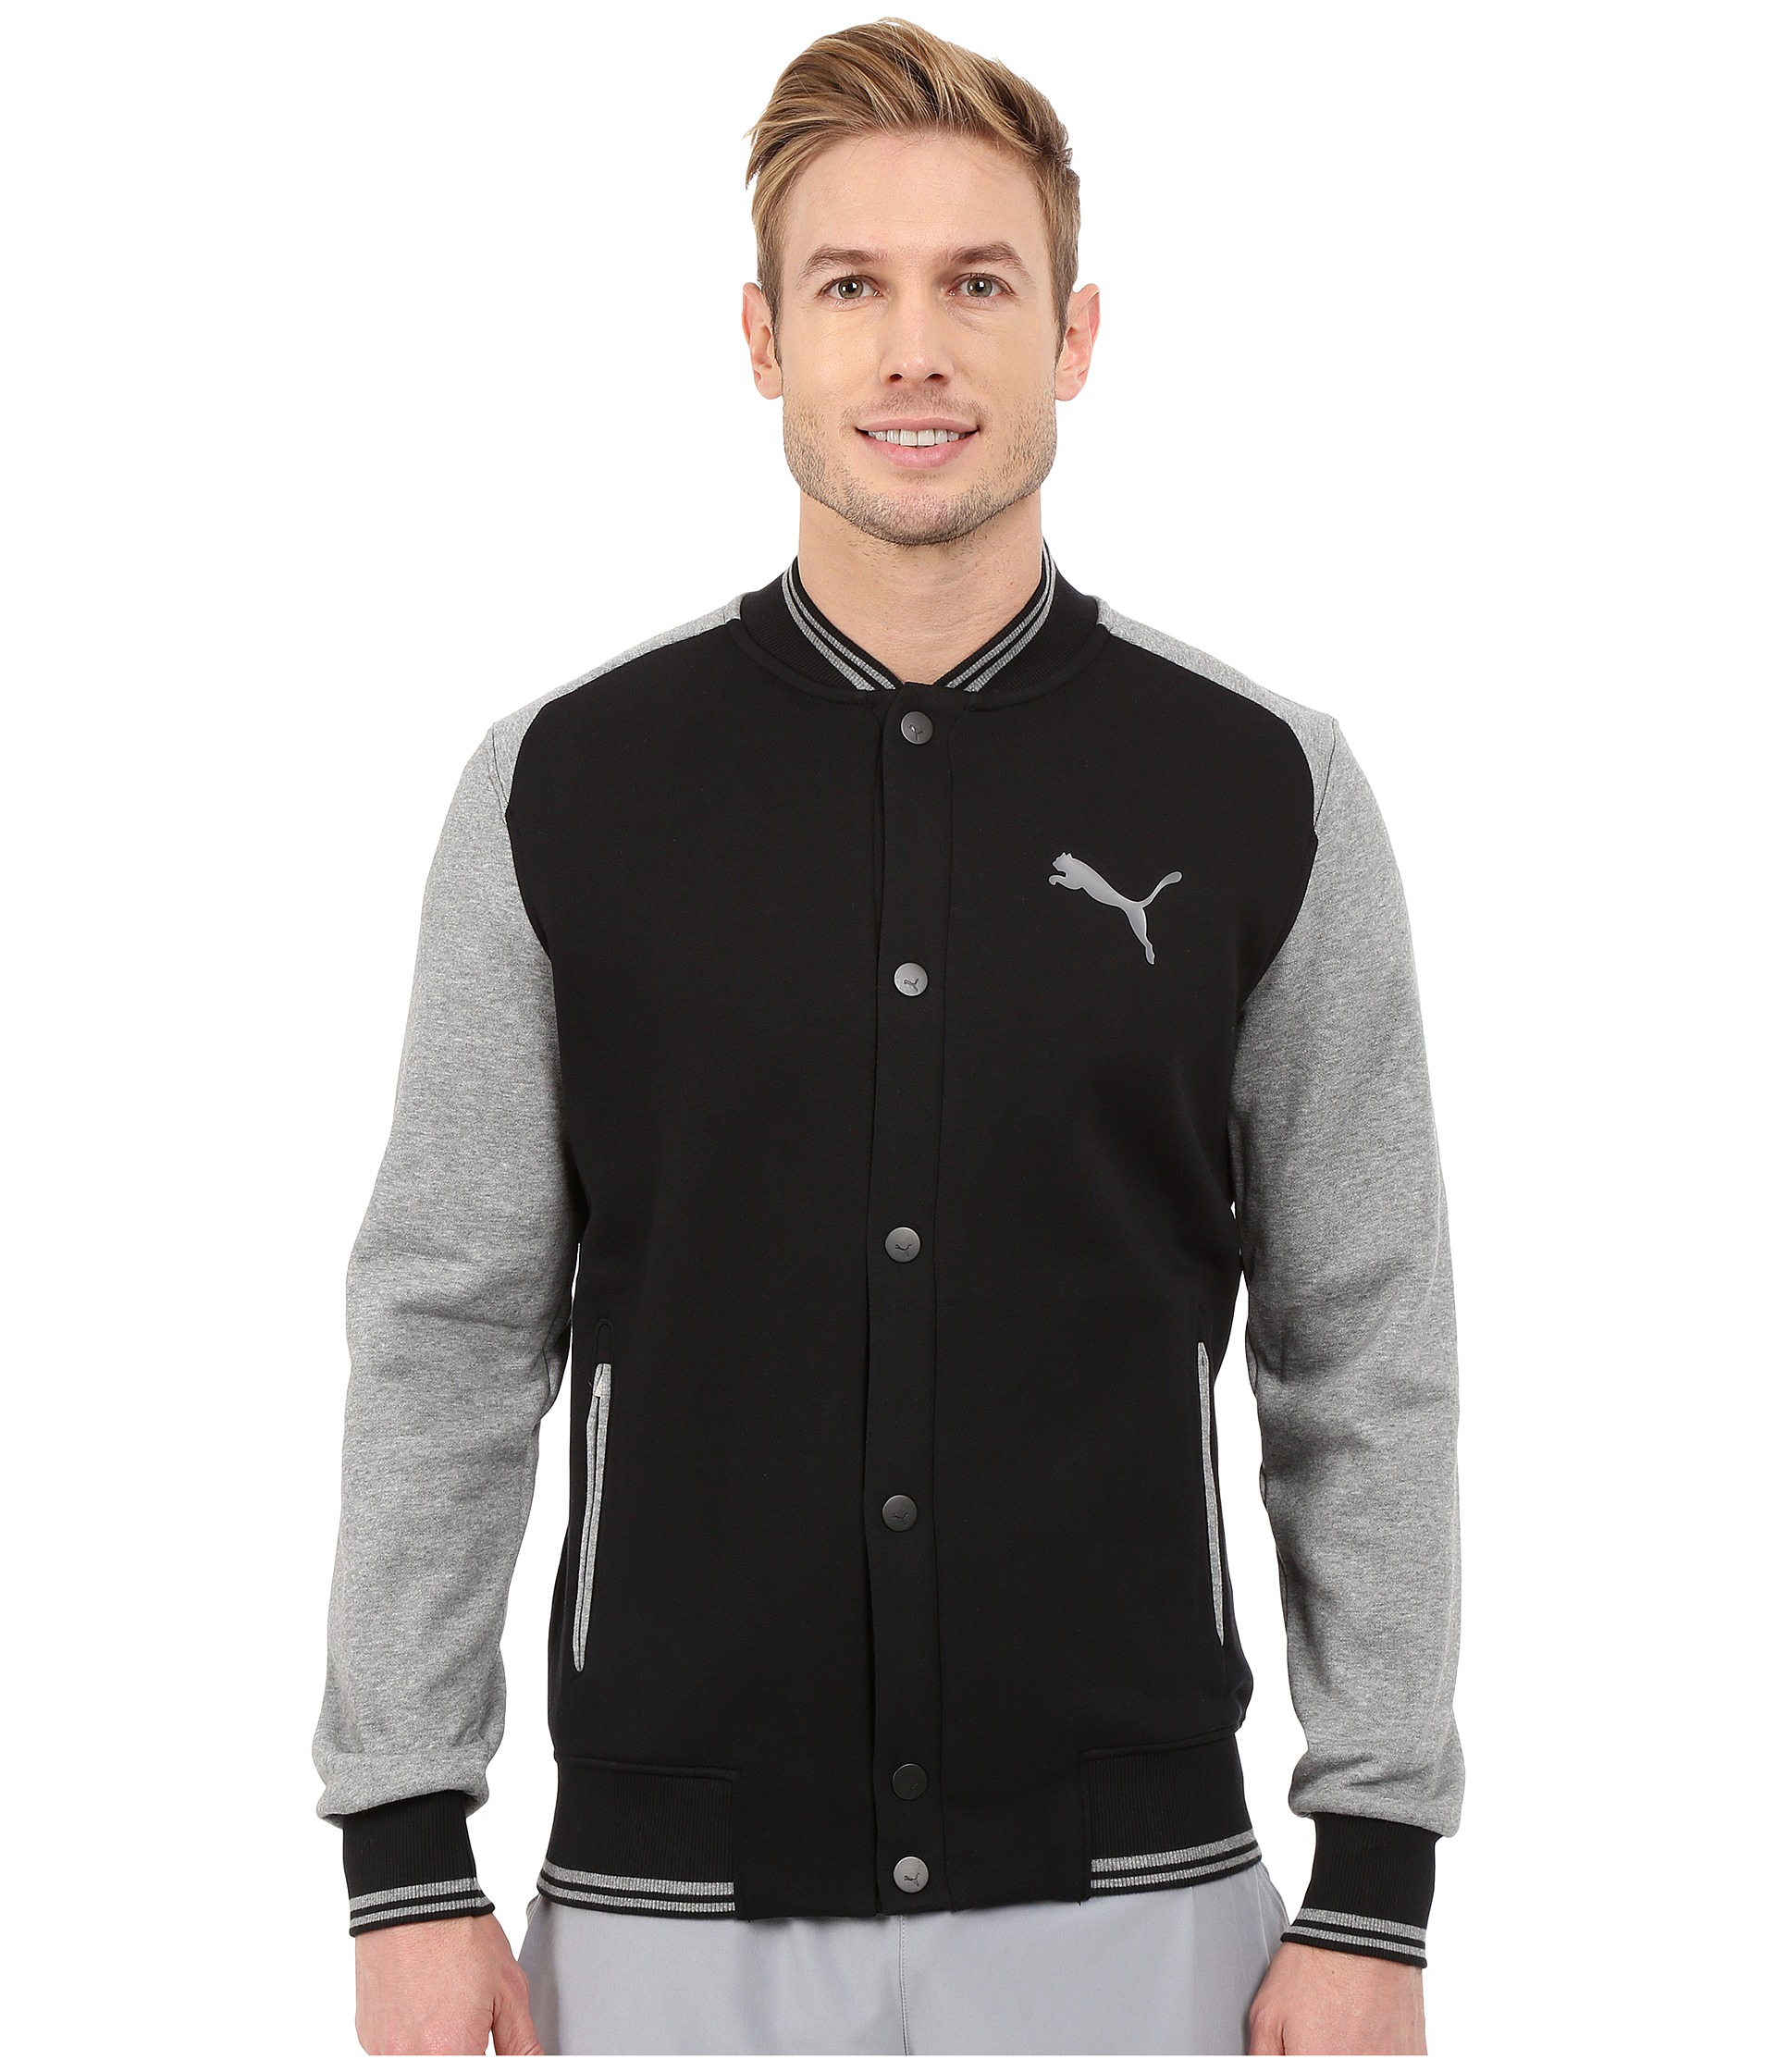 Lyst - Puma Varsity Jacket in Black for Men